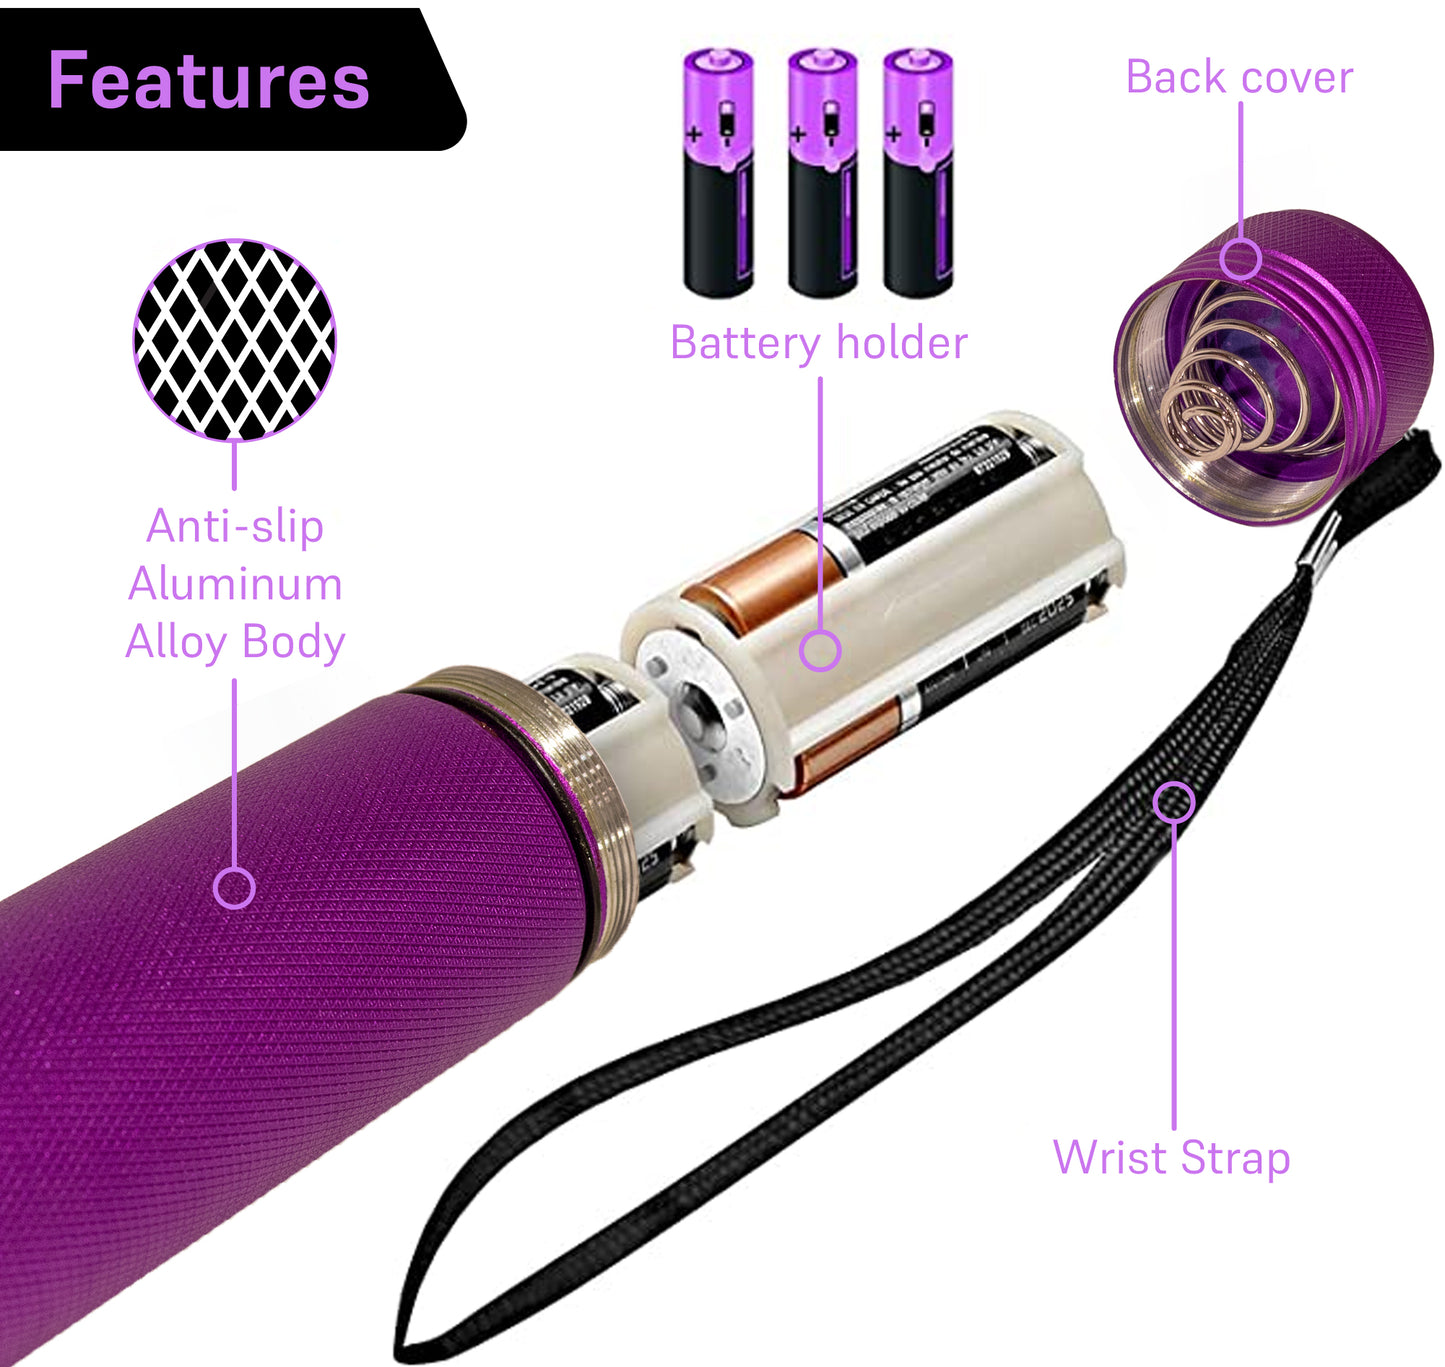 100 LED UV Ultra-Bright Blacklight Flashlight 18W 385-395nm - Purple